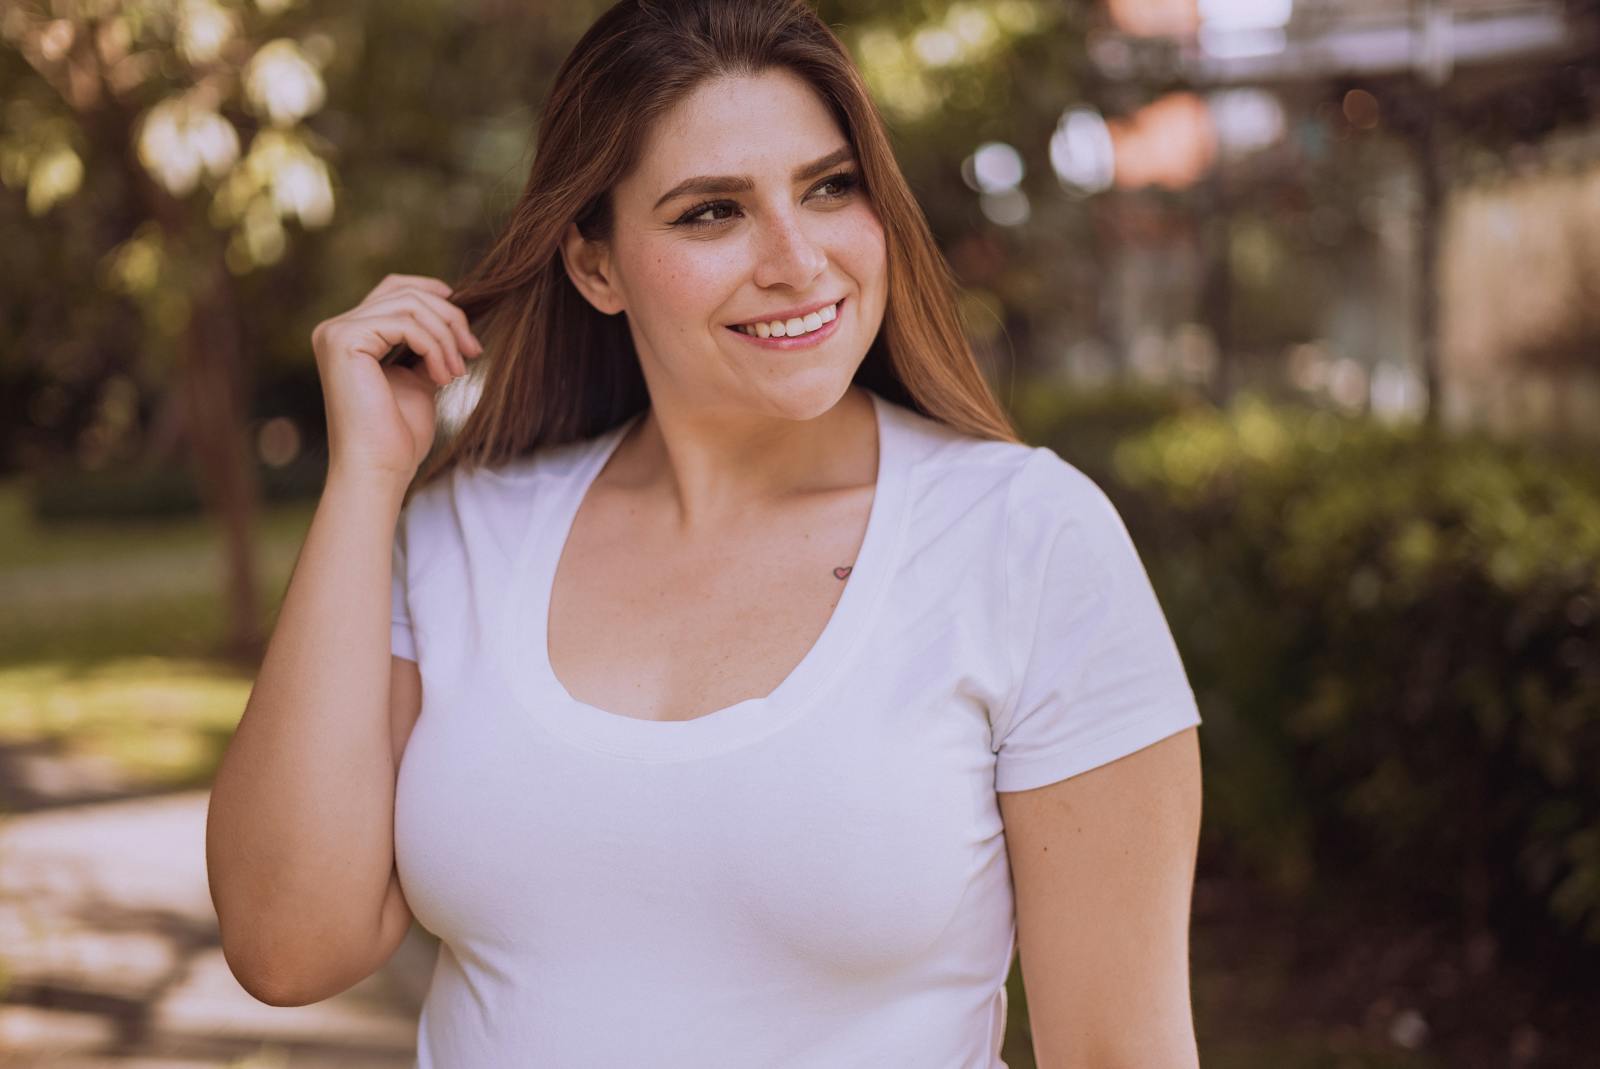 A Smiling Woman Wearing a White Shirt